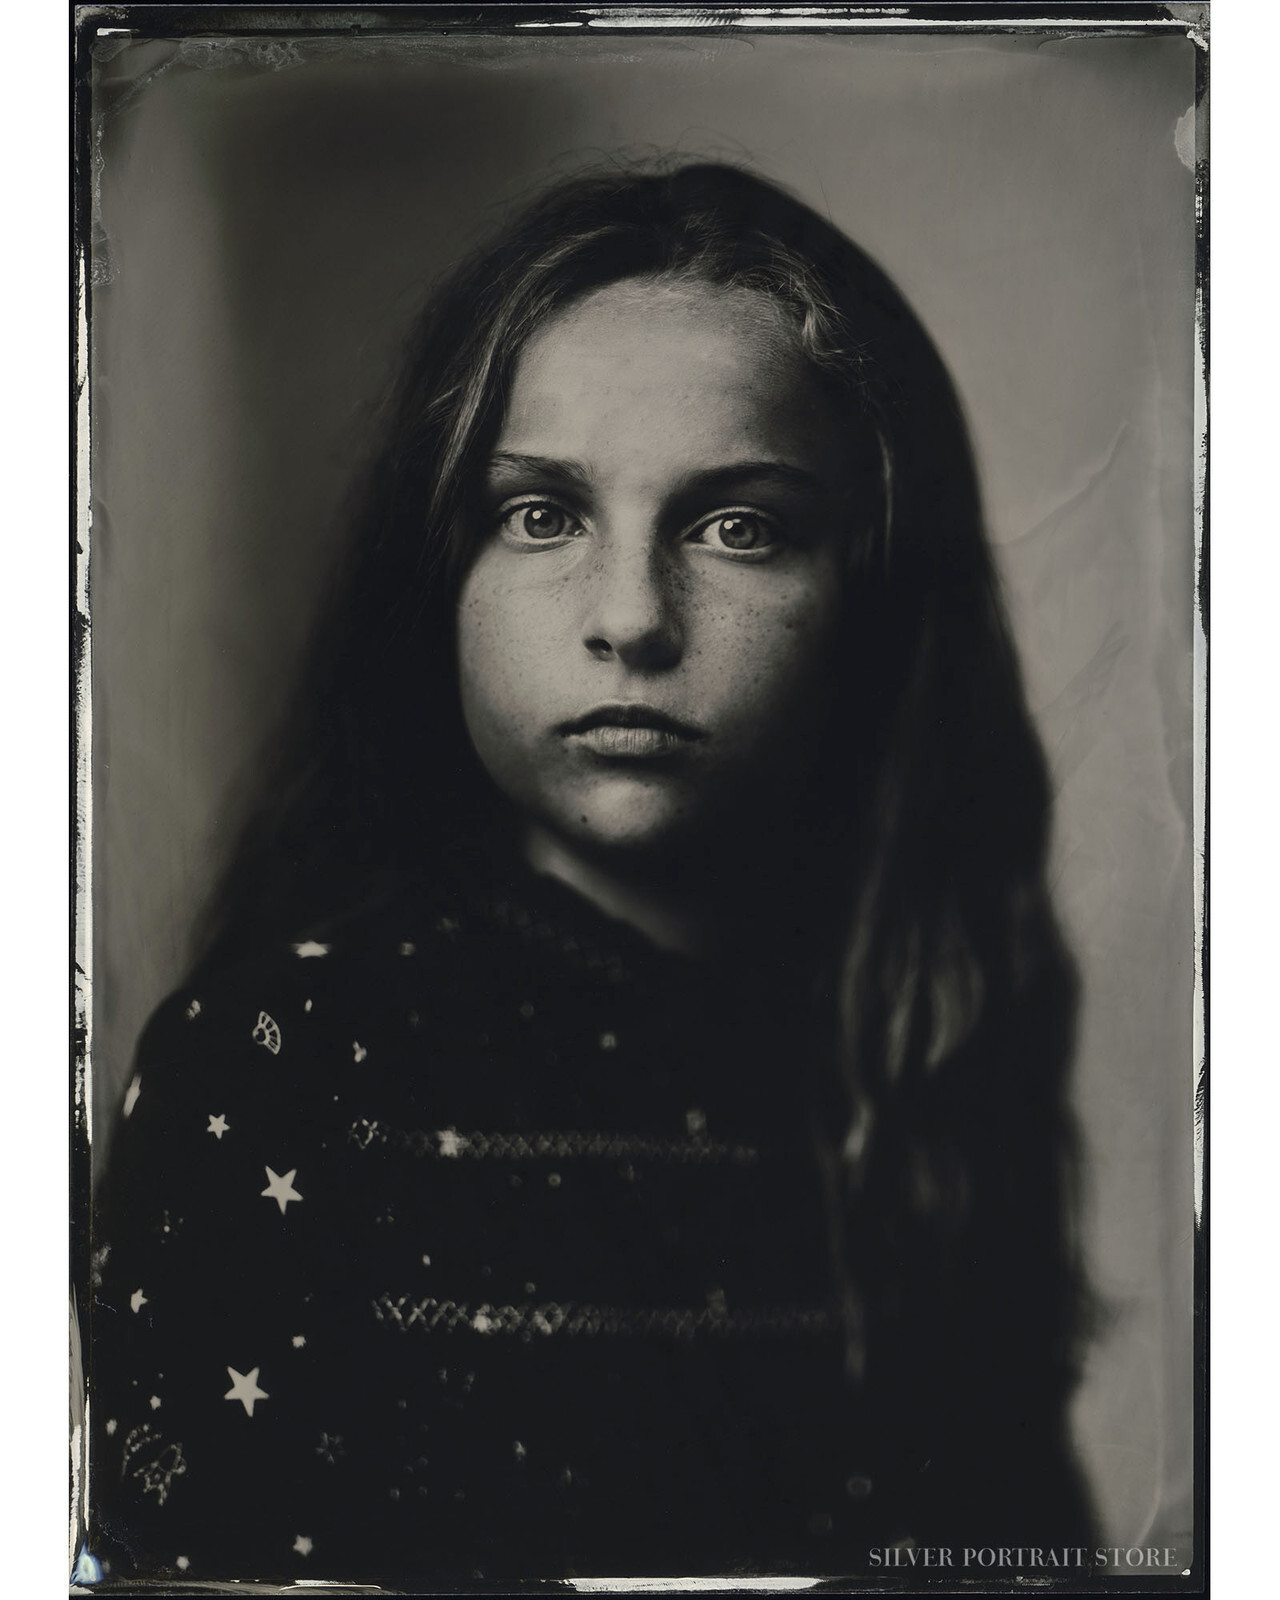 Mara-Silver Portrait Store-Wet plate collodion-Tintype 13 x 18 cm.